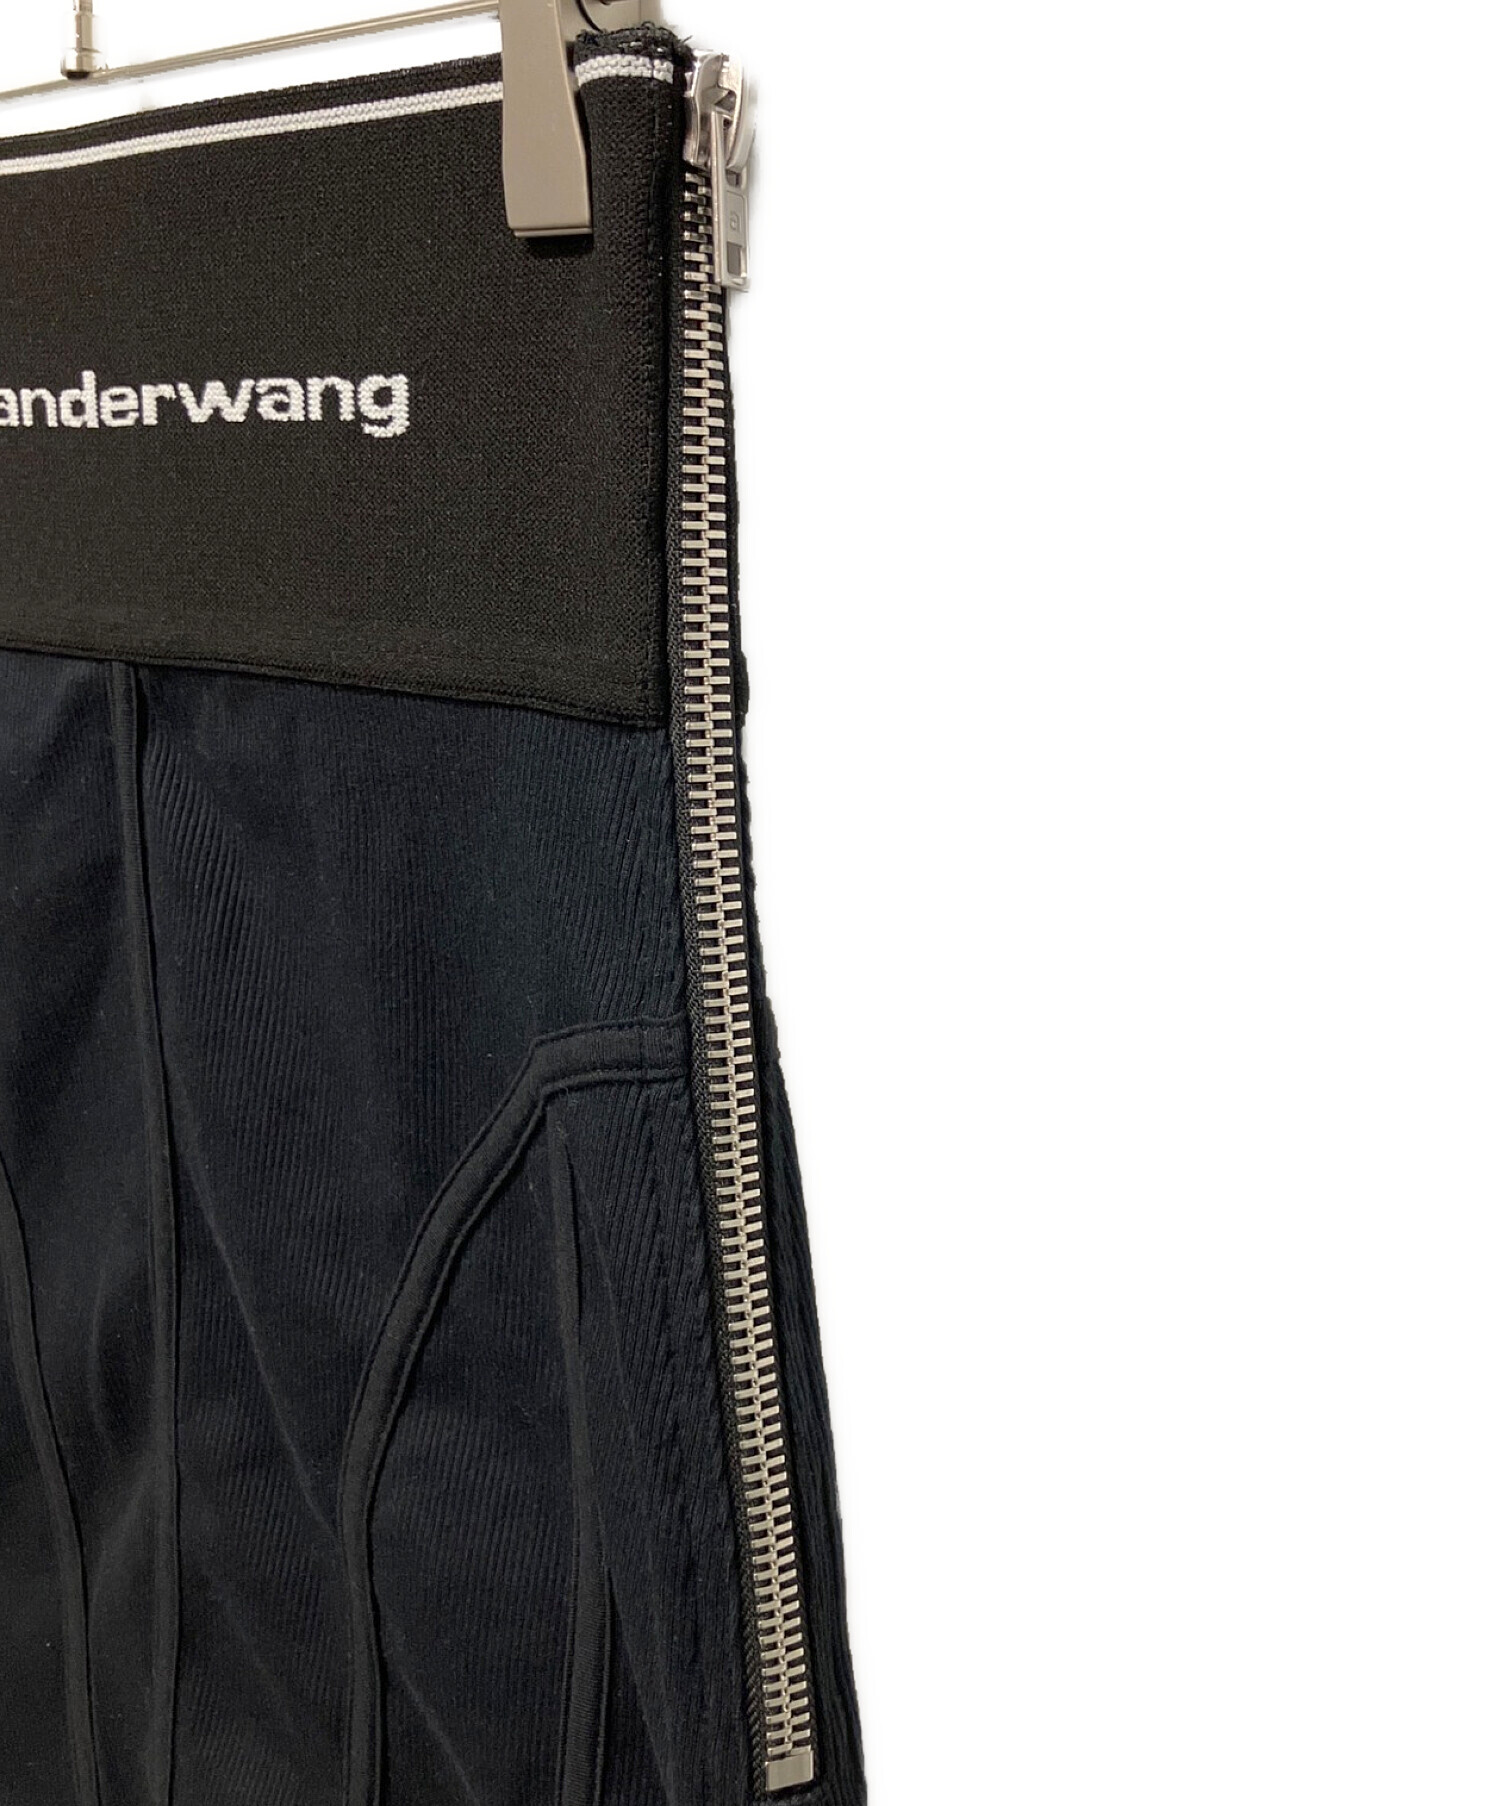 ALEXANDER WANG (アレキサンダーワン) ウエストロゴニットタイトスカート ブラック サイズ:XS